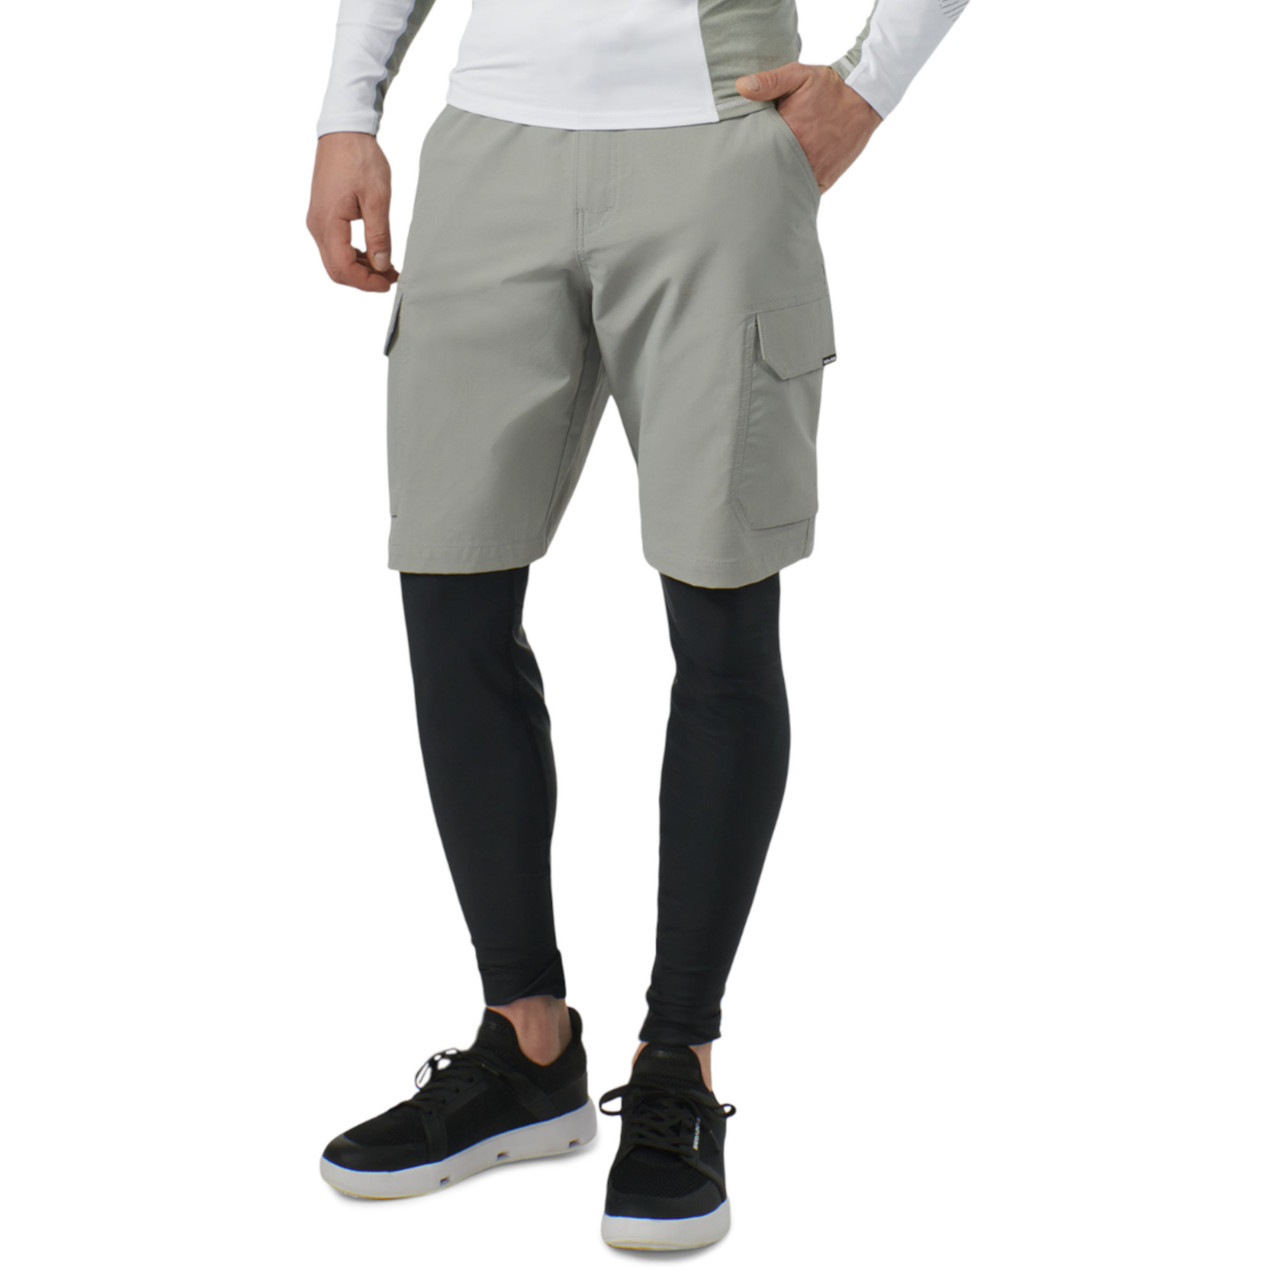 Sea-Doo New OEM, Men's 2XL Quick-Dry UV Protection Leggings, 4547071490